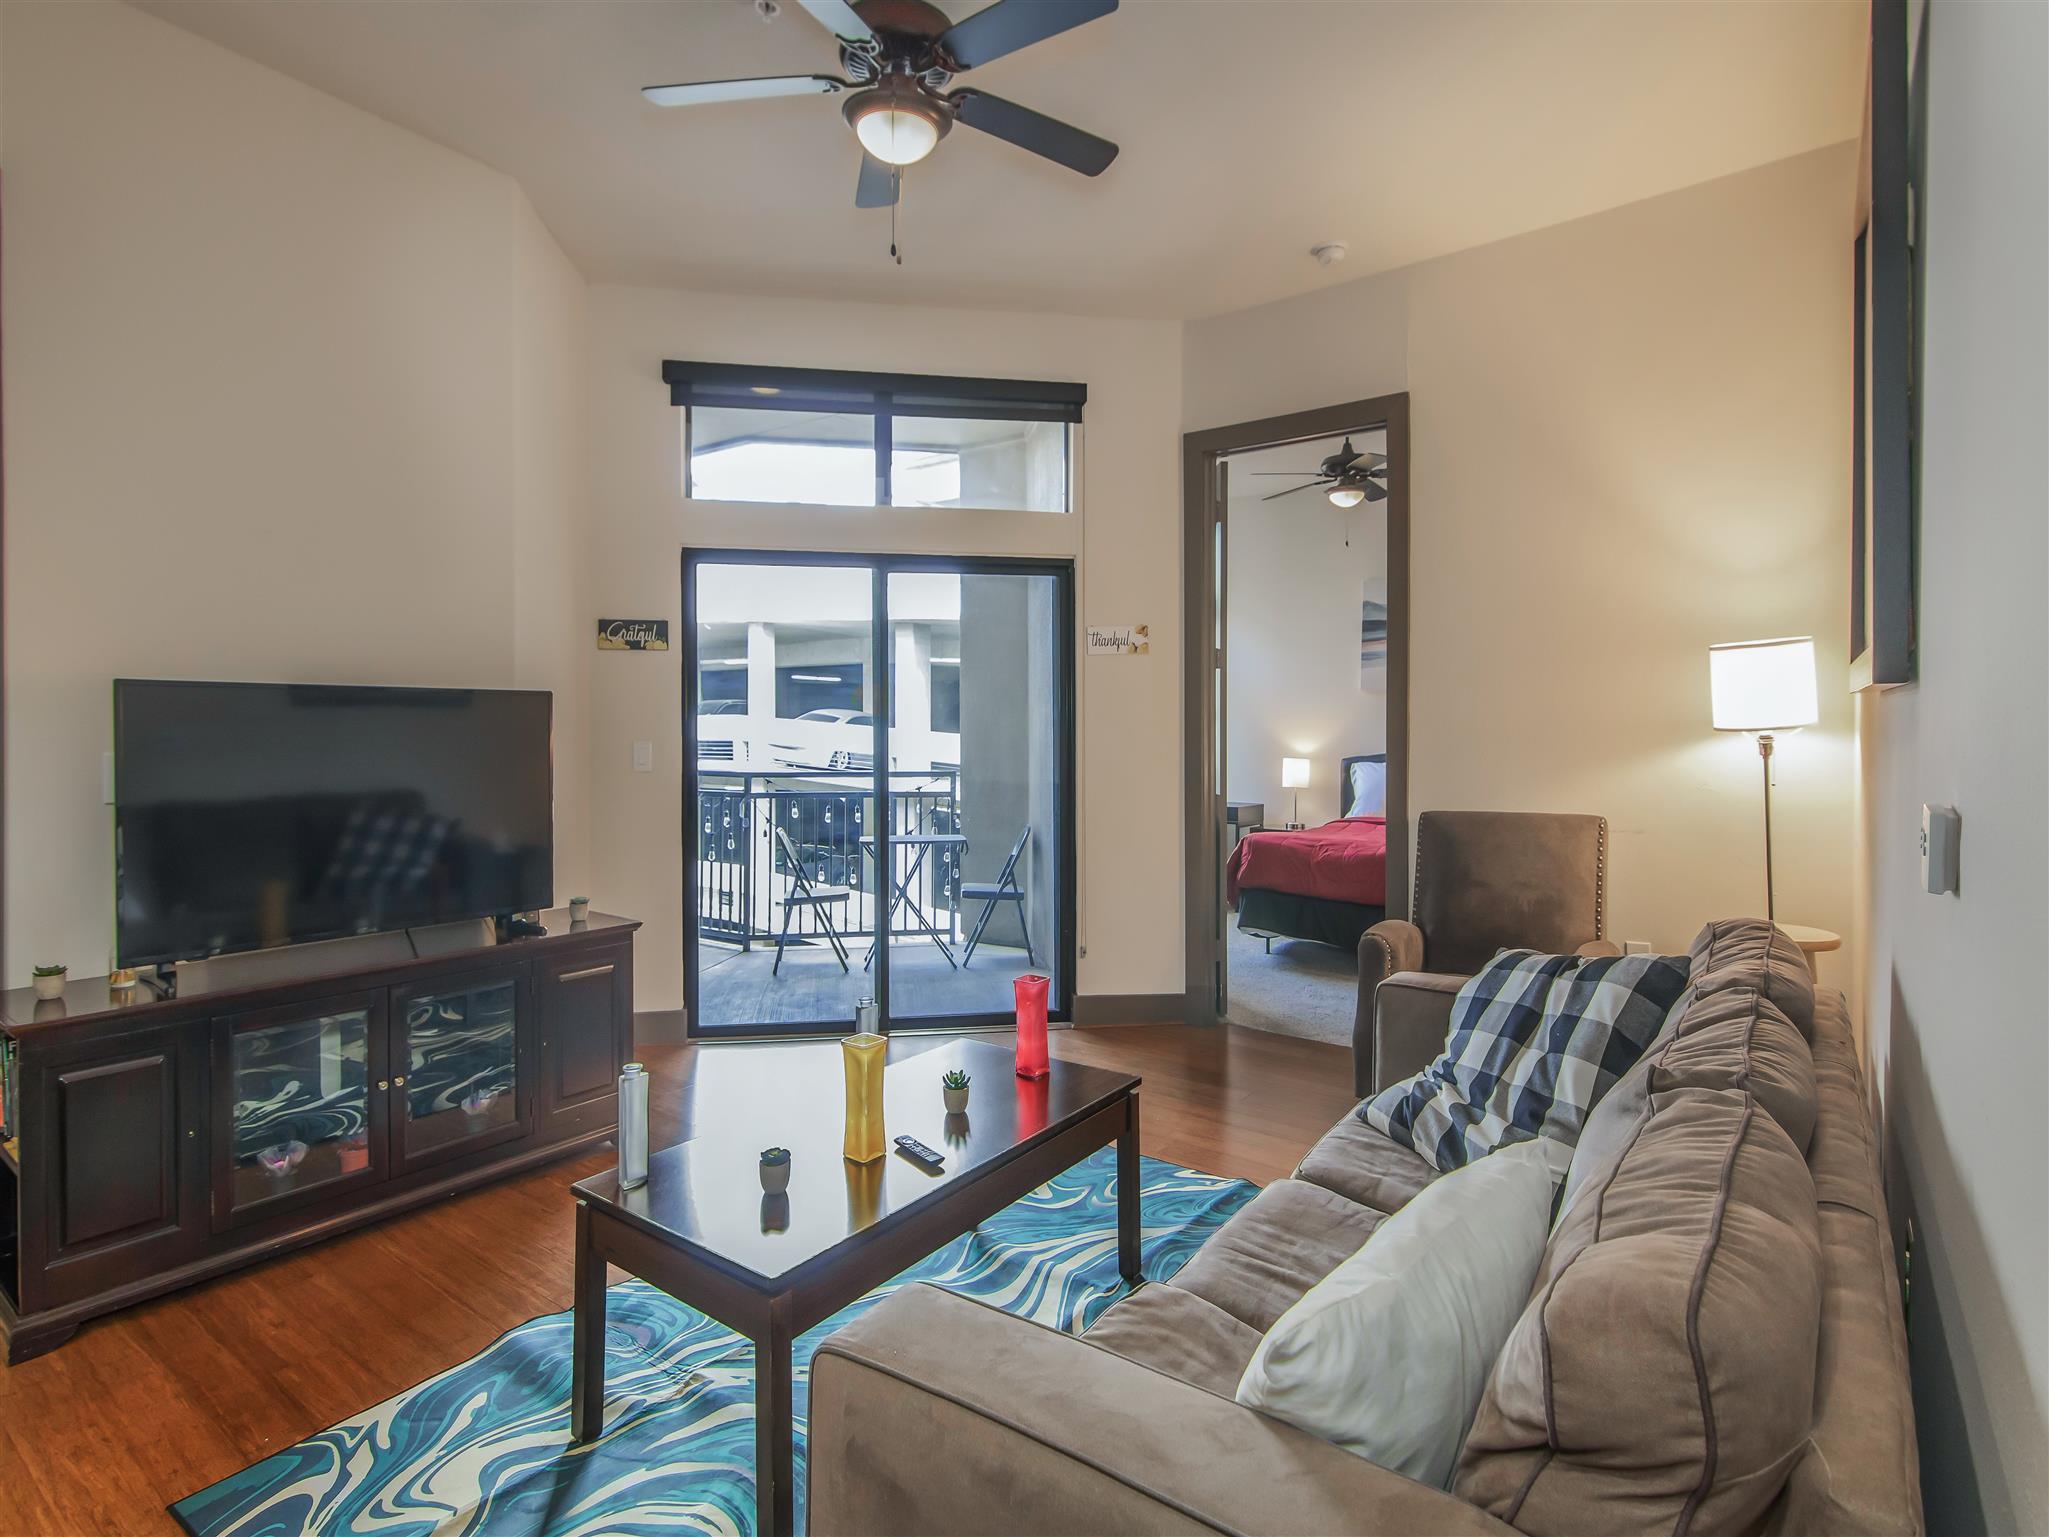 Furnished apartments Houston